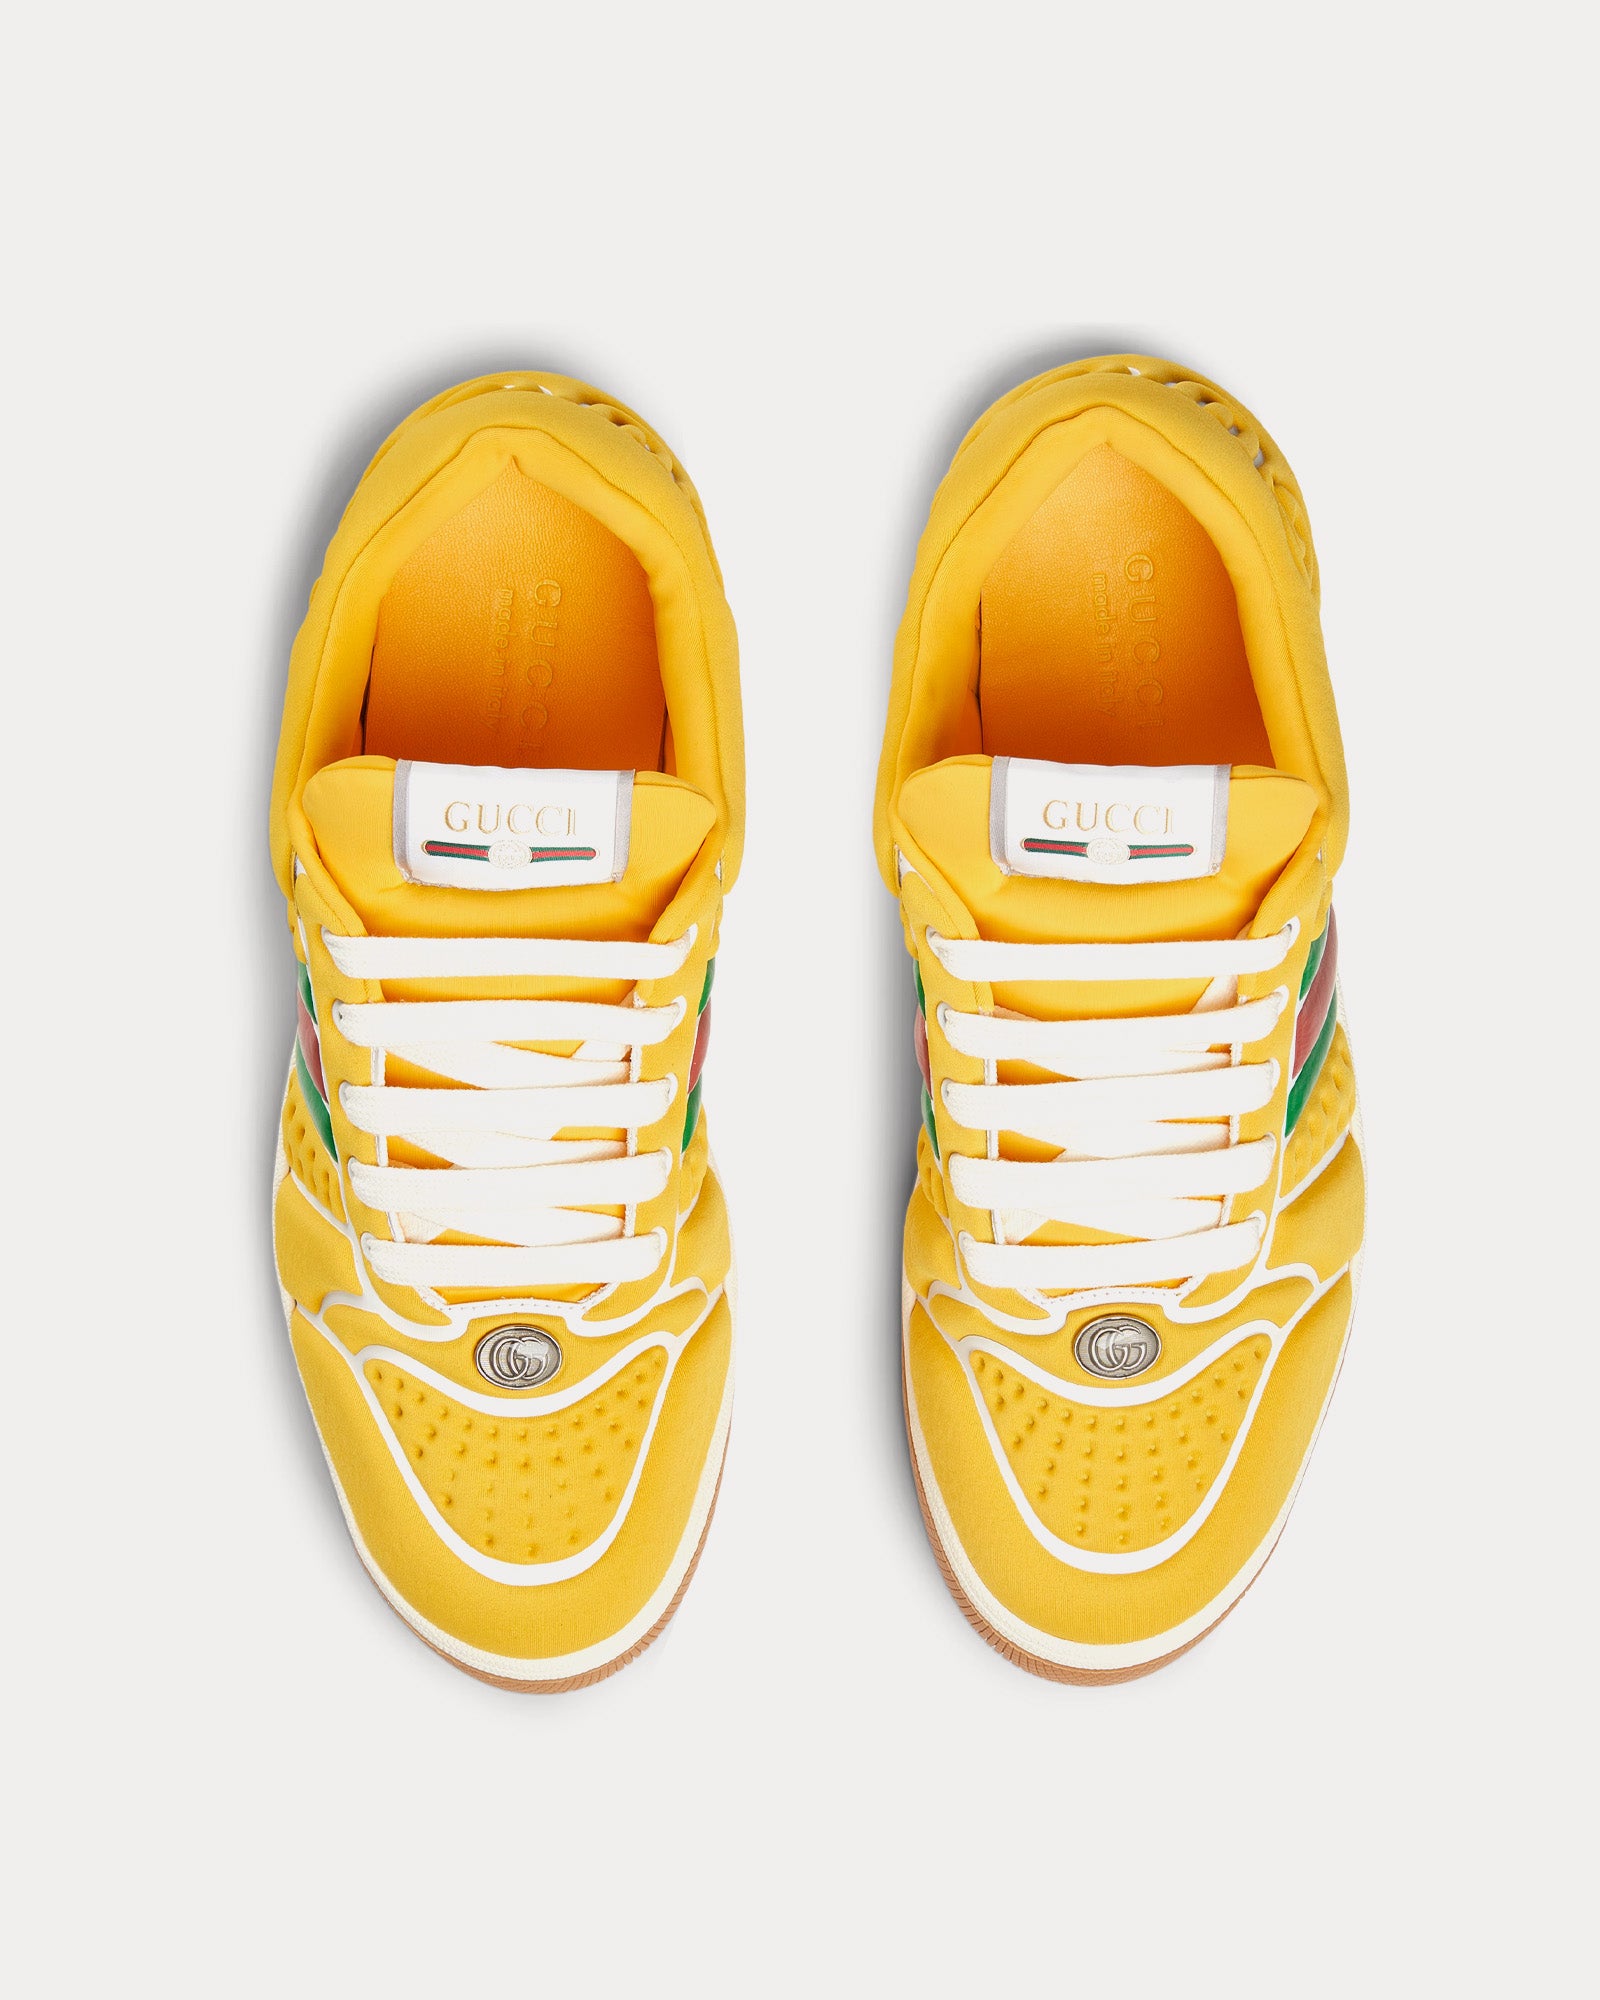 Gucci - Screener with Web Neoprene Yellow Low Top Sneakers